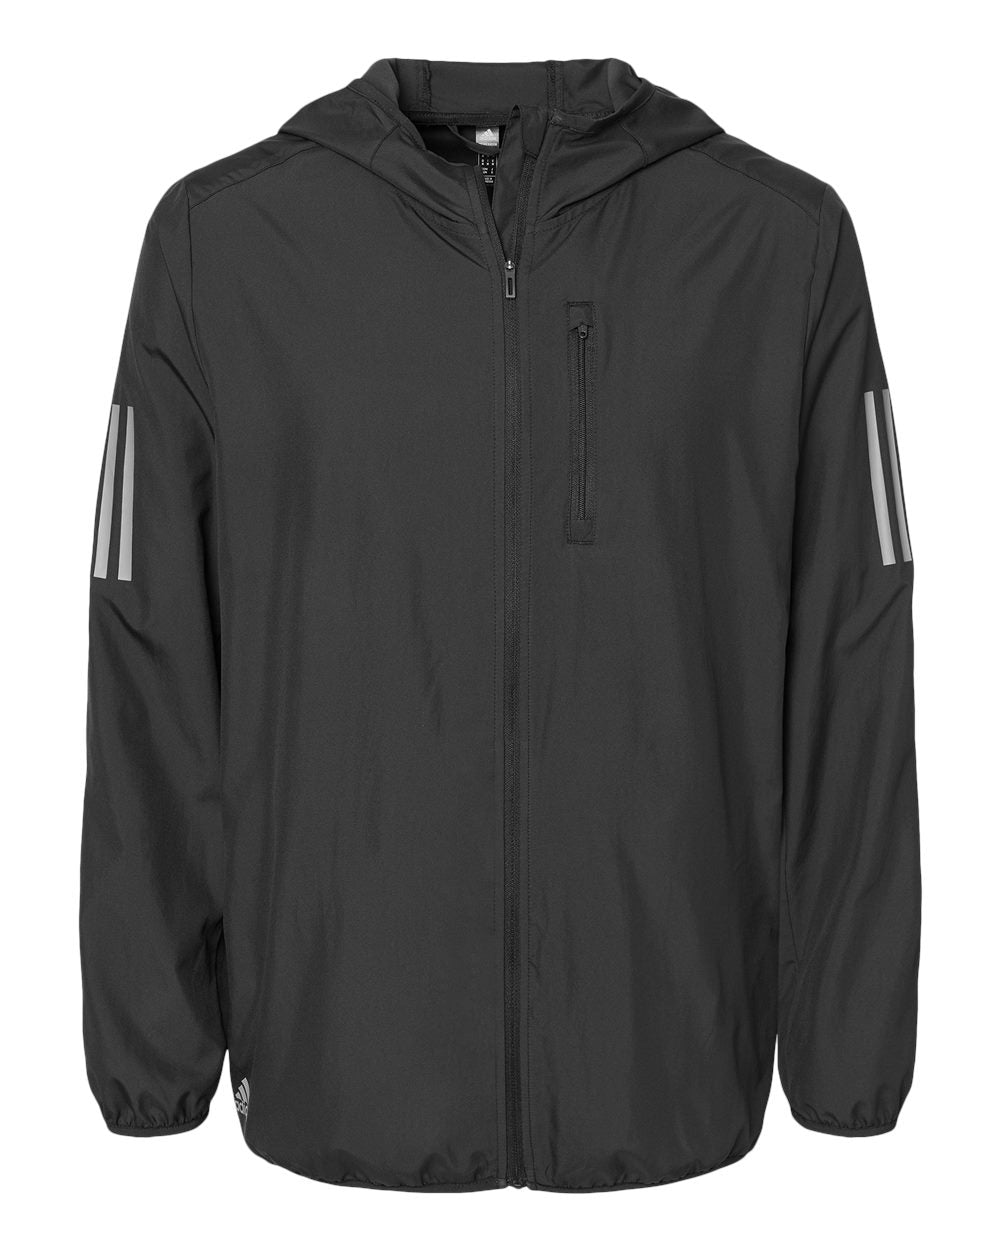 Hooded Full-Zip Men's Windbreaker - Adidas A524